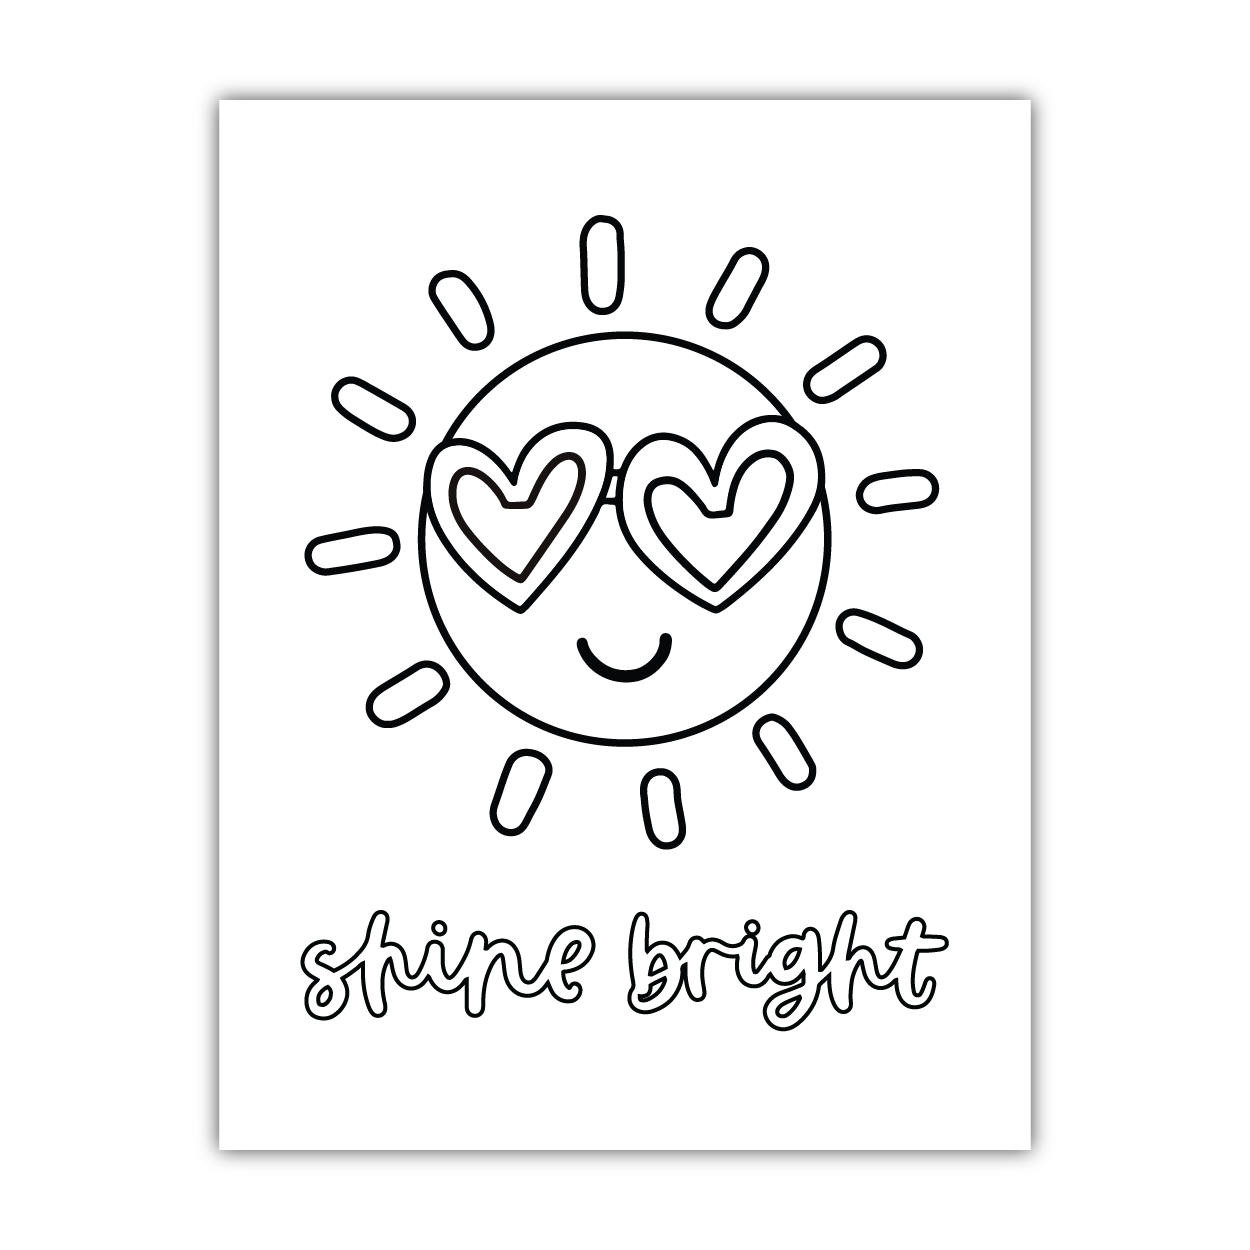 Shine Bright Coloring Sheet